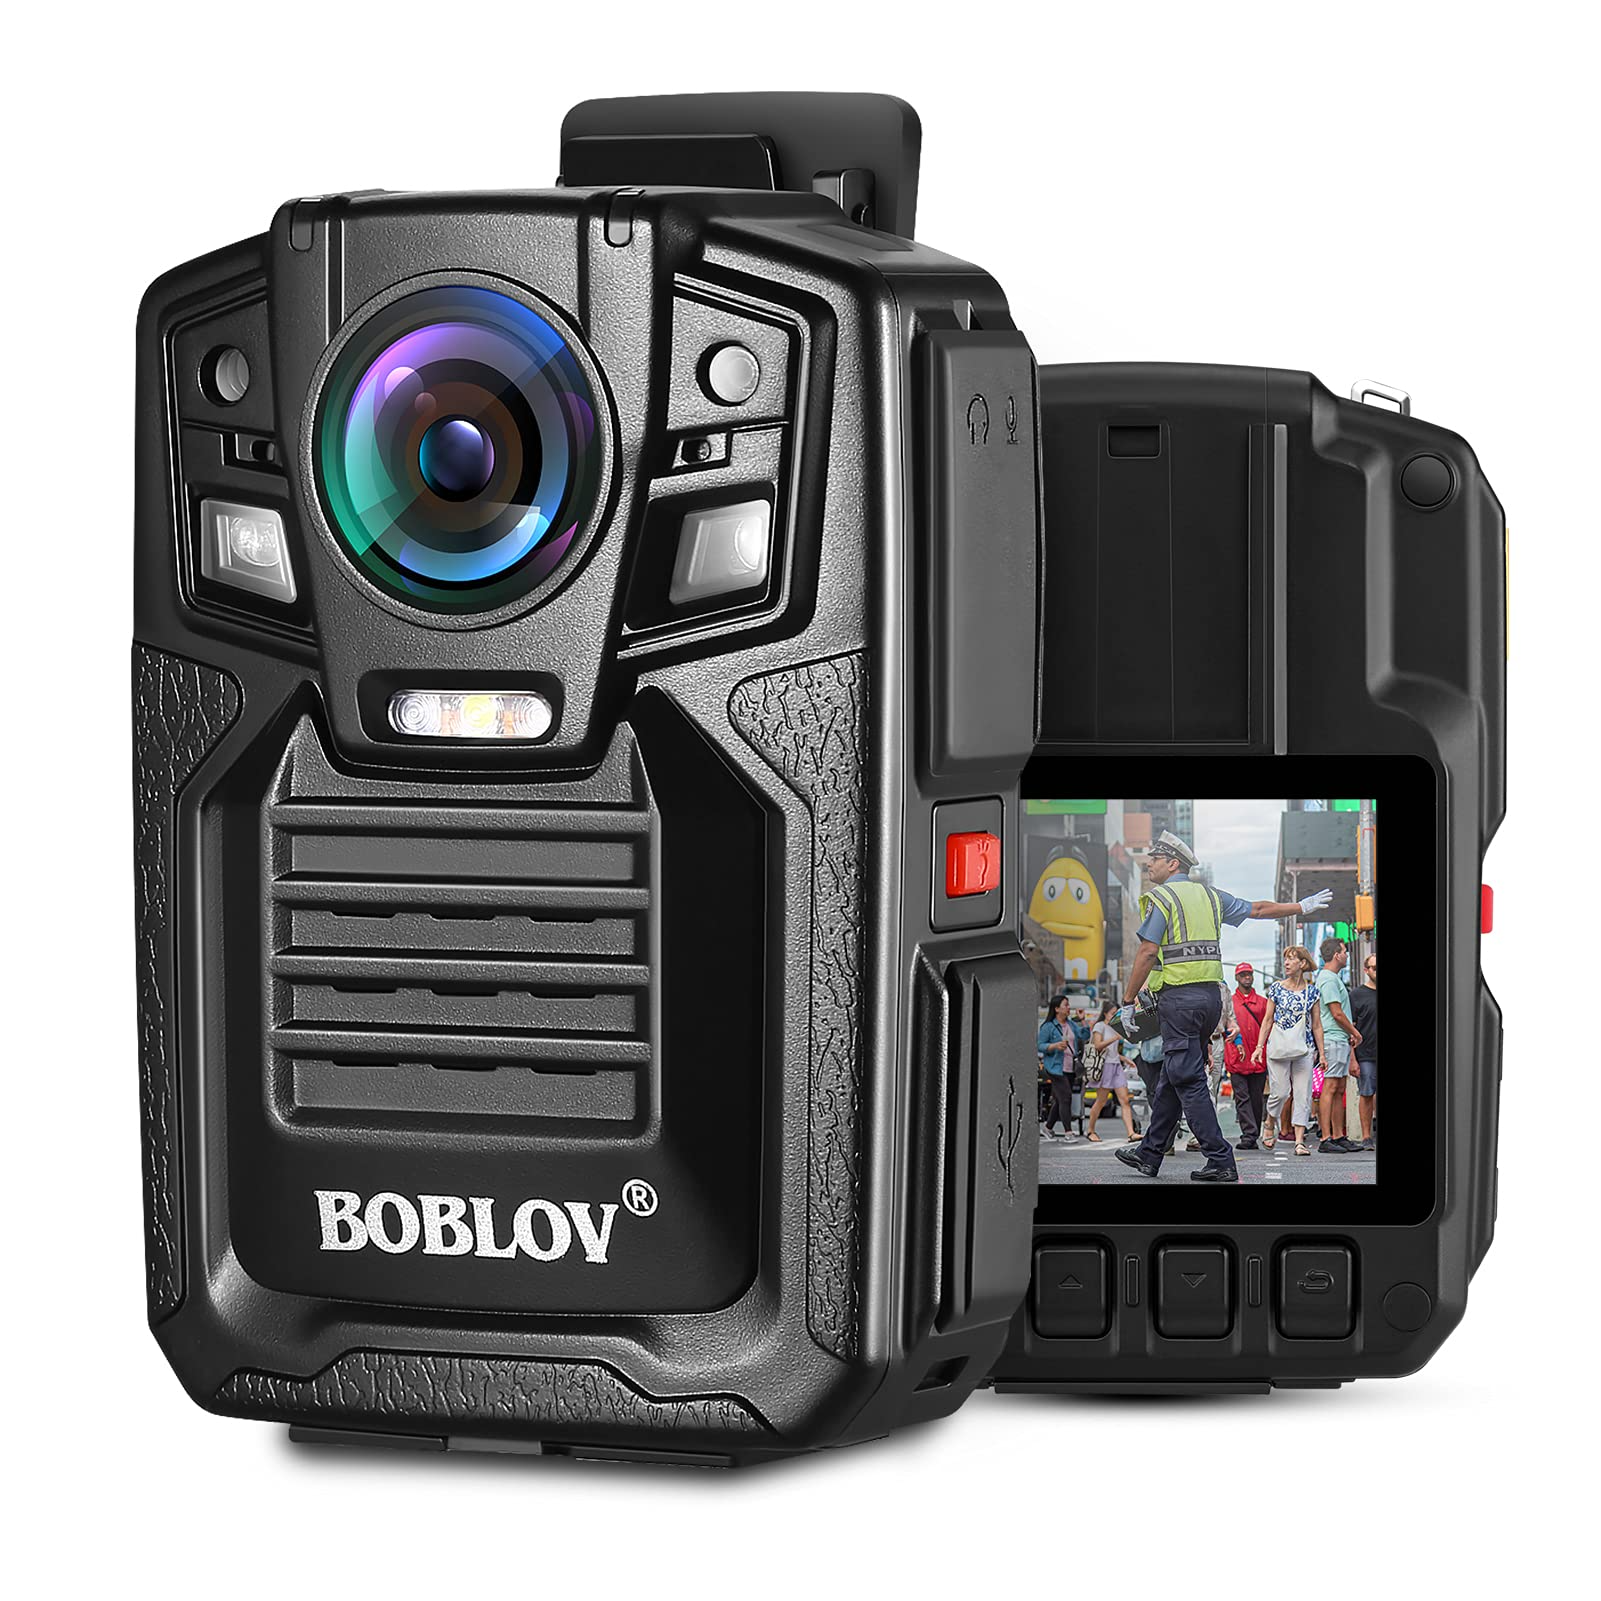 BOBLOV HD66/D7 body worn camera IP67 waterproof 1296P high-definition wearable camera6